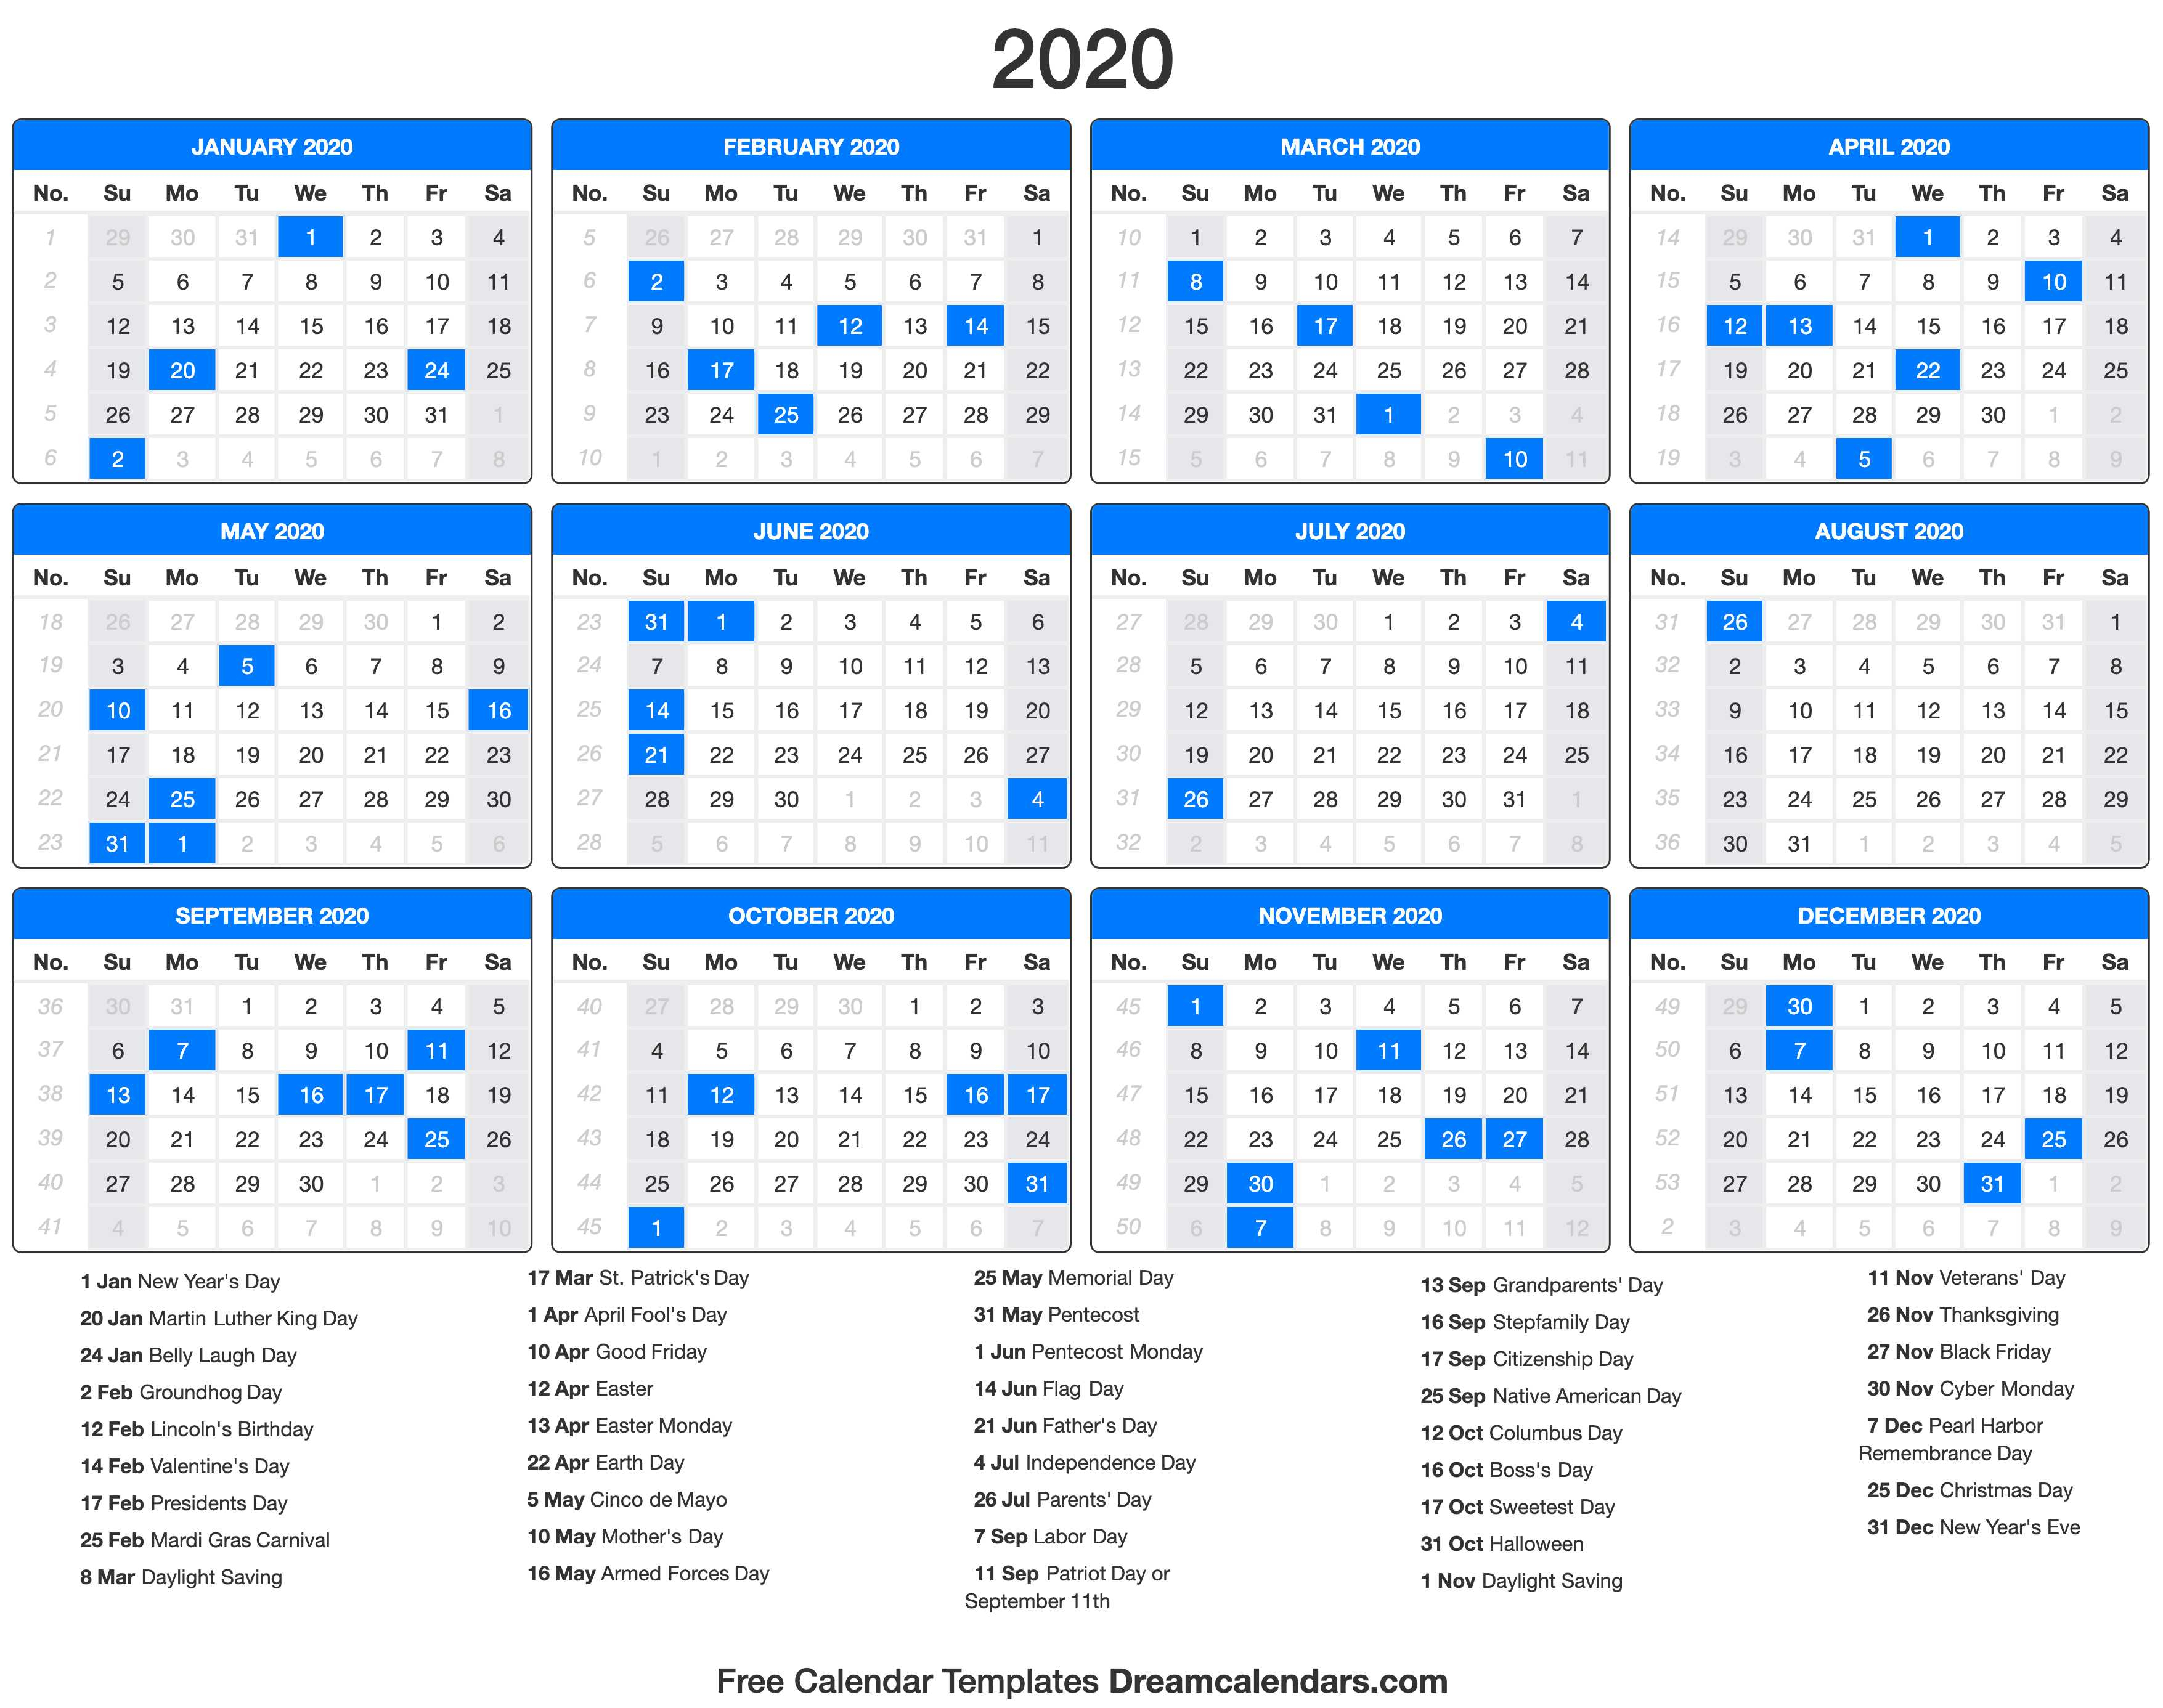 Dream Calendars - Make Your Calendar Template Blog